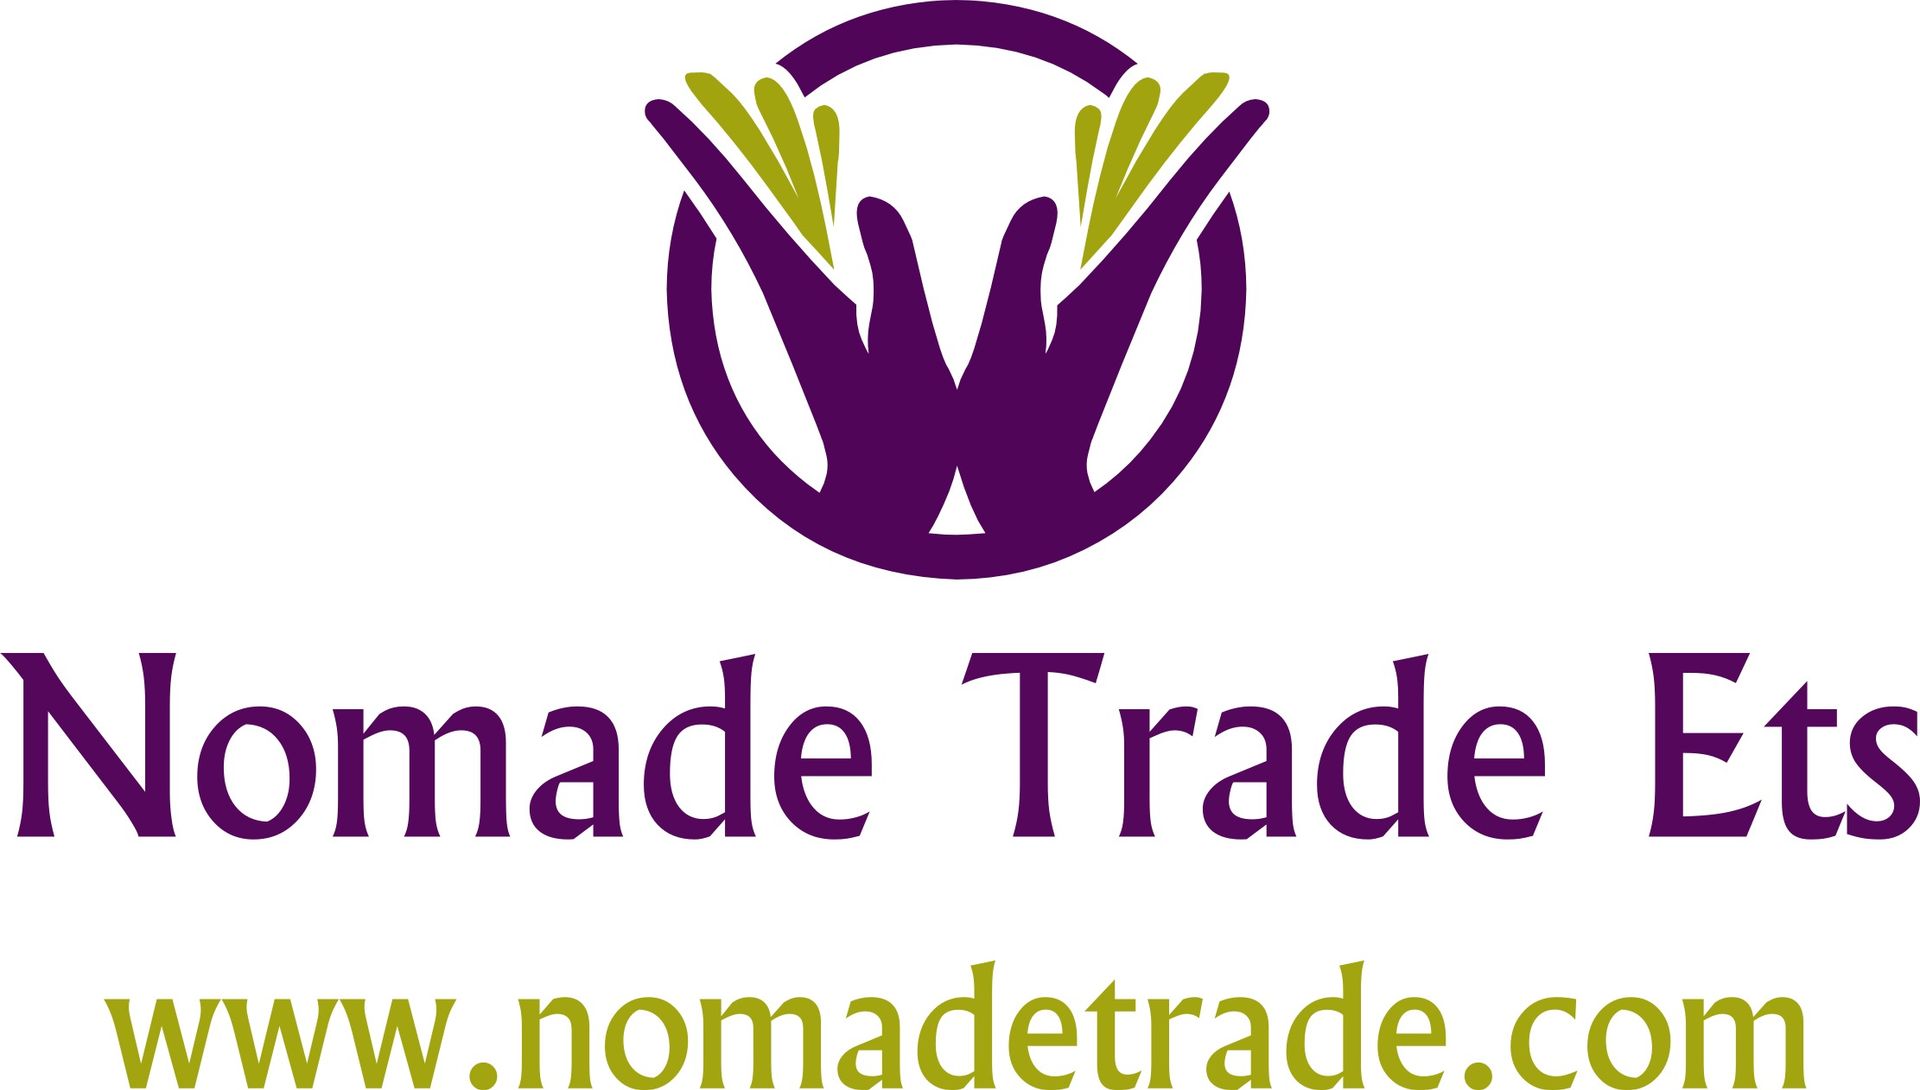 Nomade Trade Ets logo